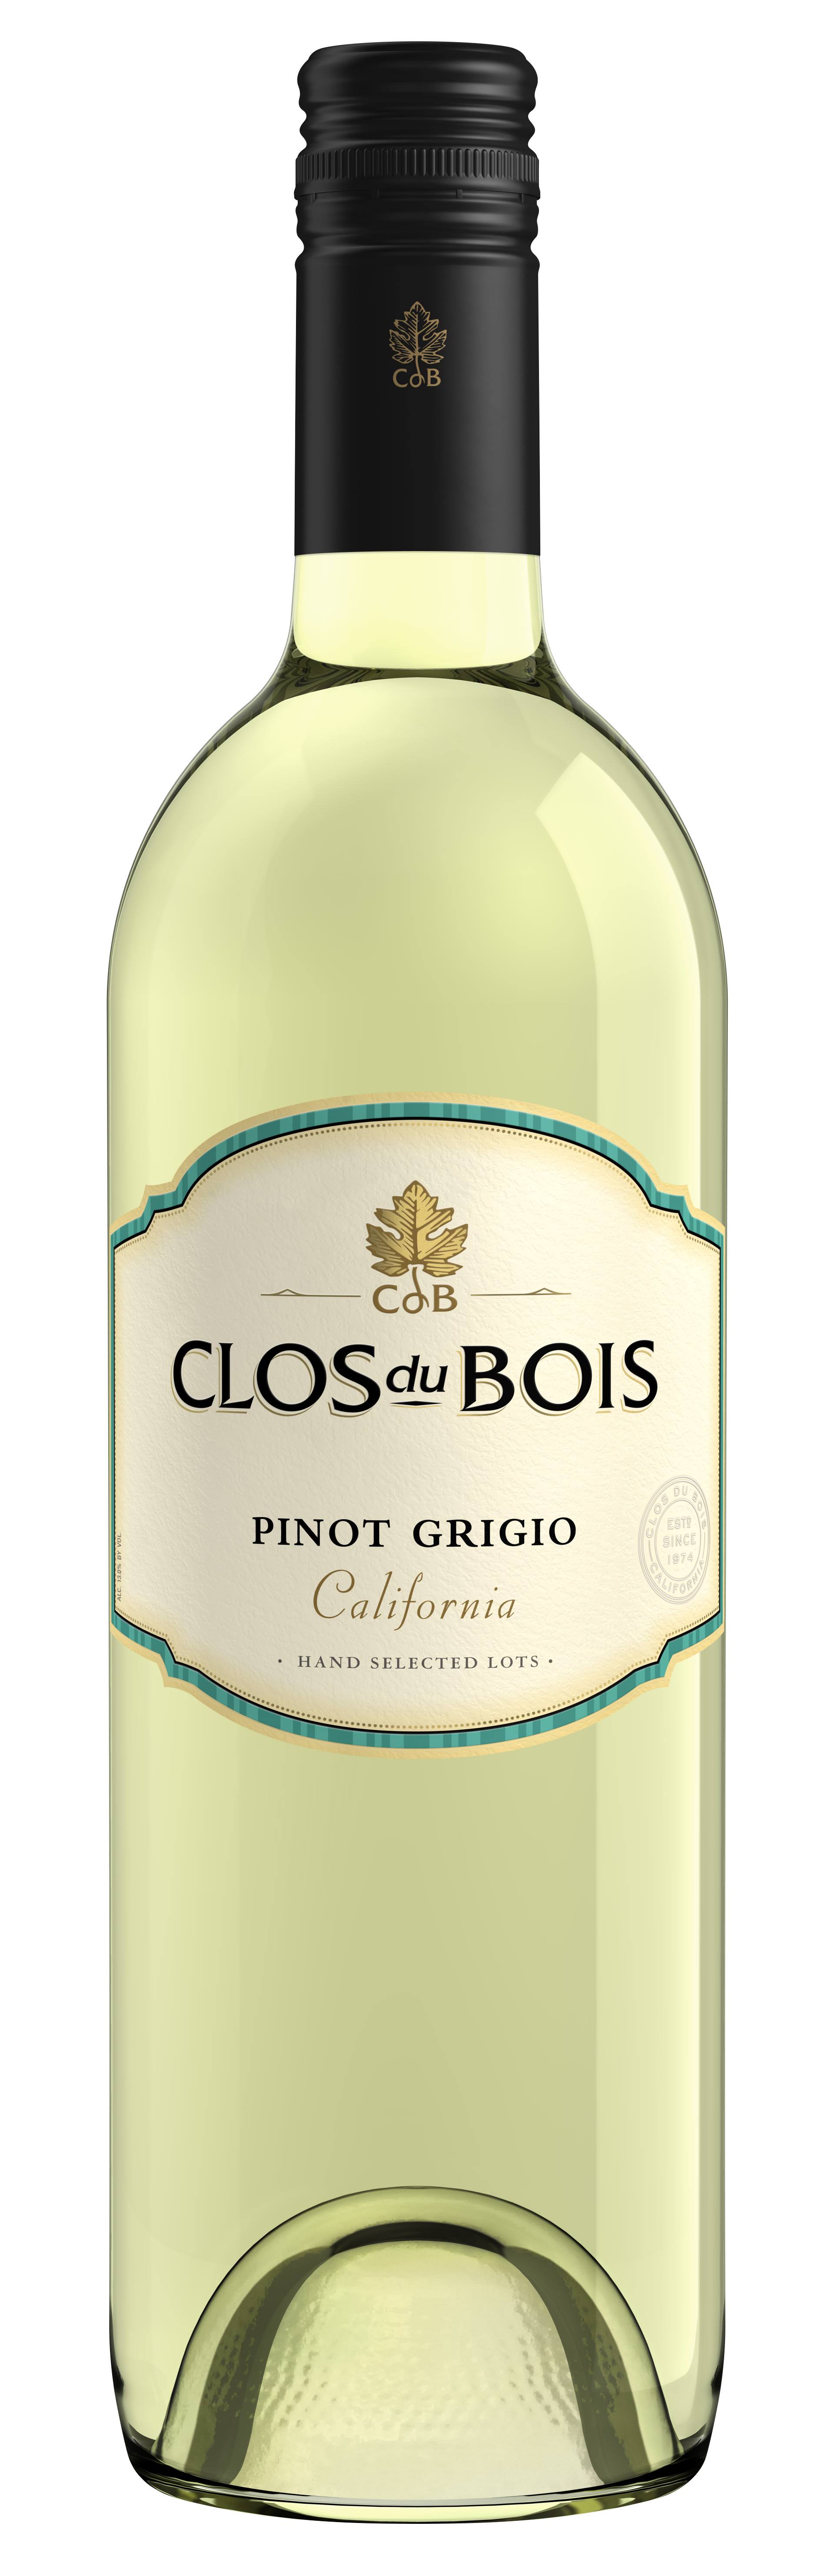 Clos du Bois Pinot Grigio, California, 2017 - 750 ml